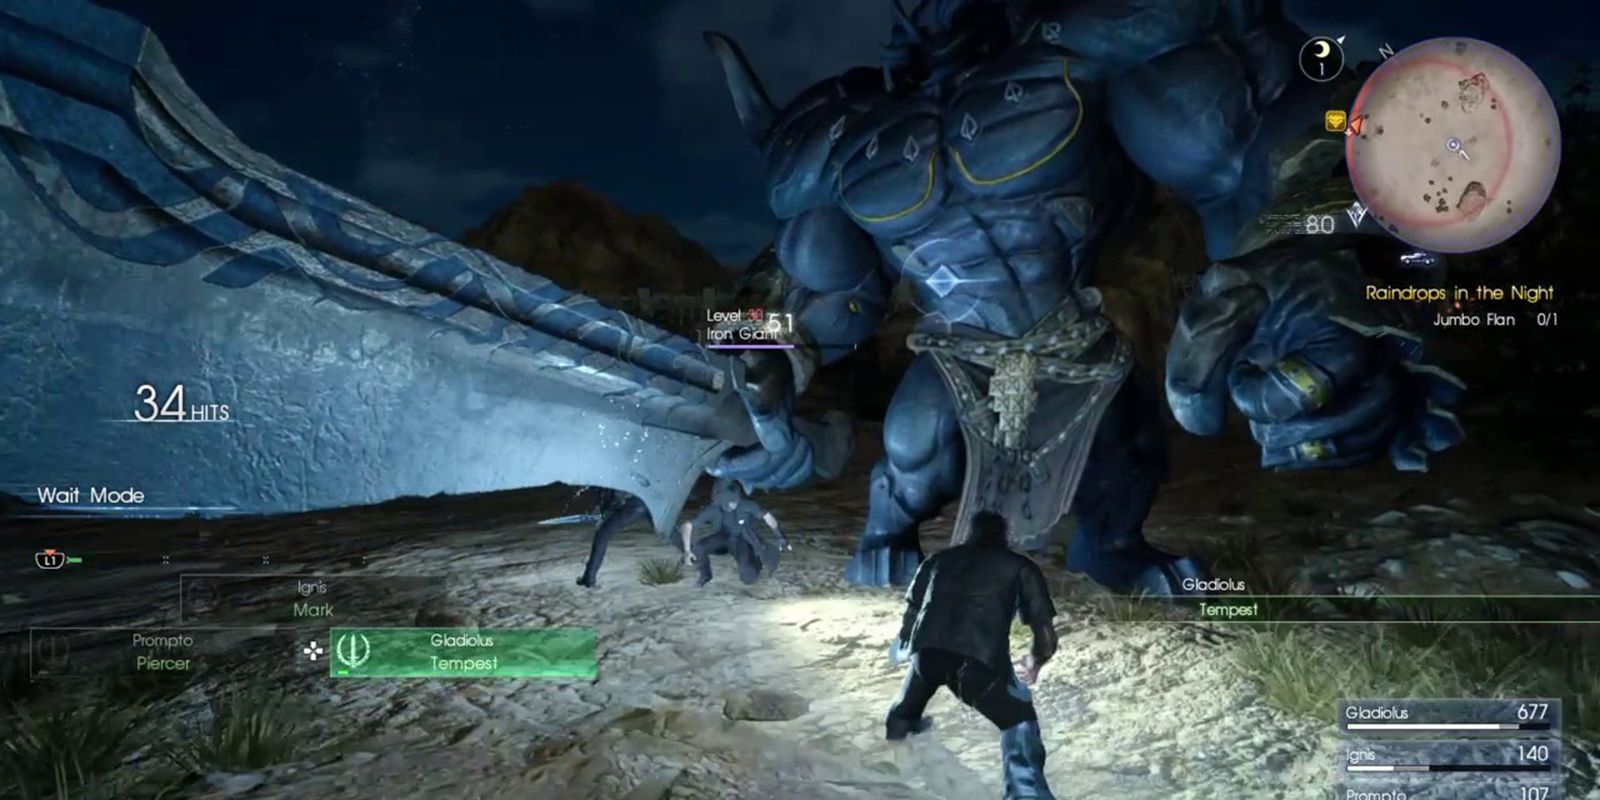 Iron Giant from Final Fantasy XV